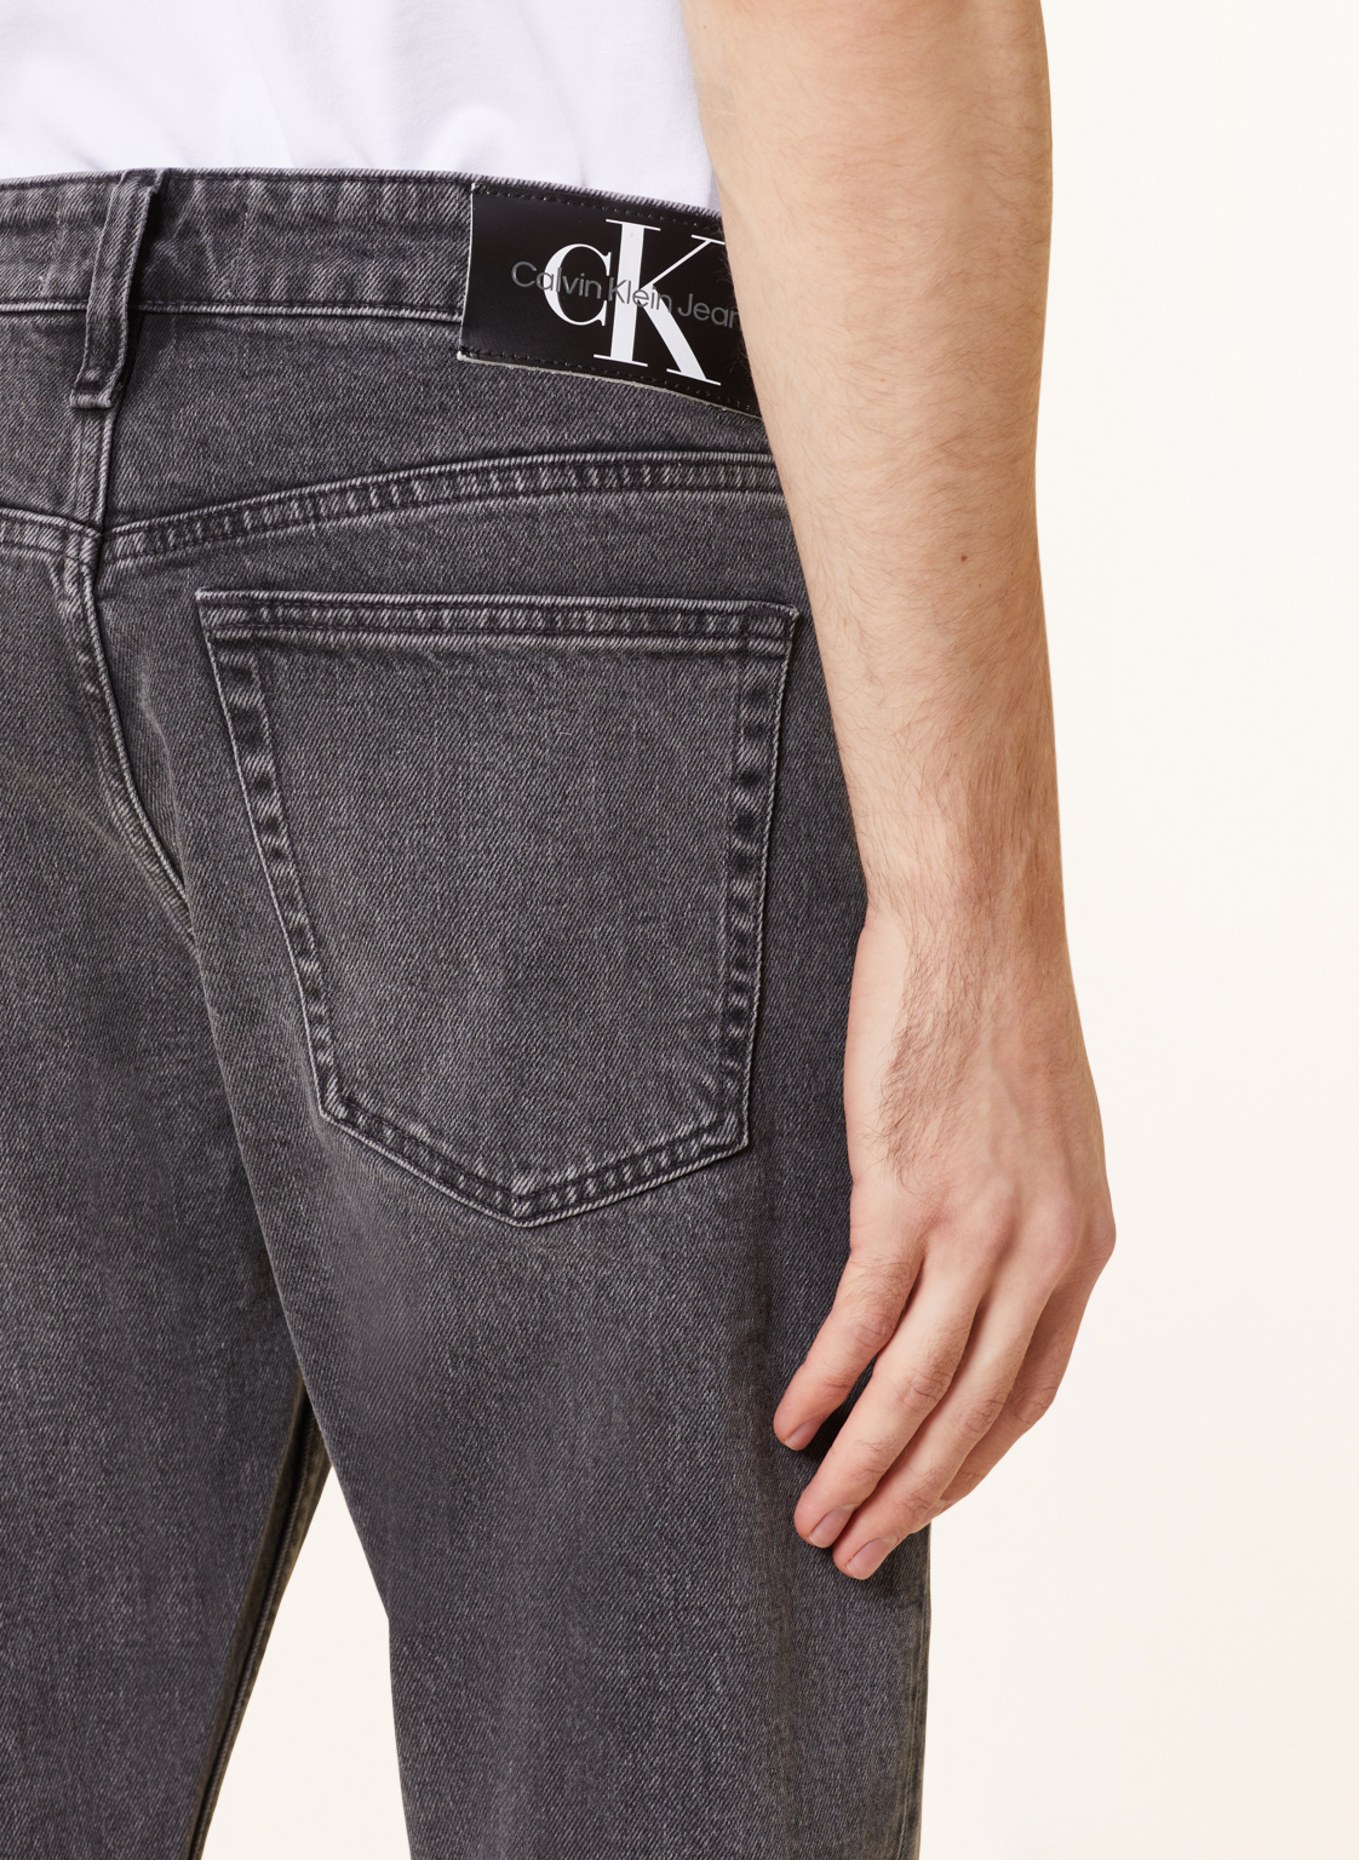 Calvin Klein Jeans Jeans Slim in Fit Taper grau